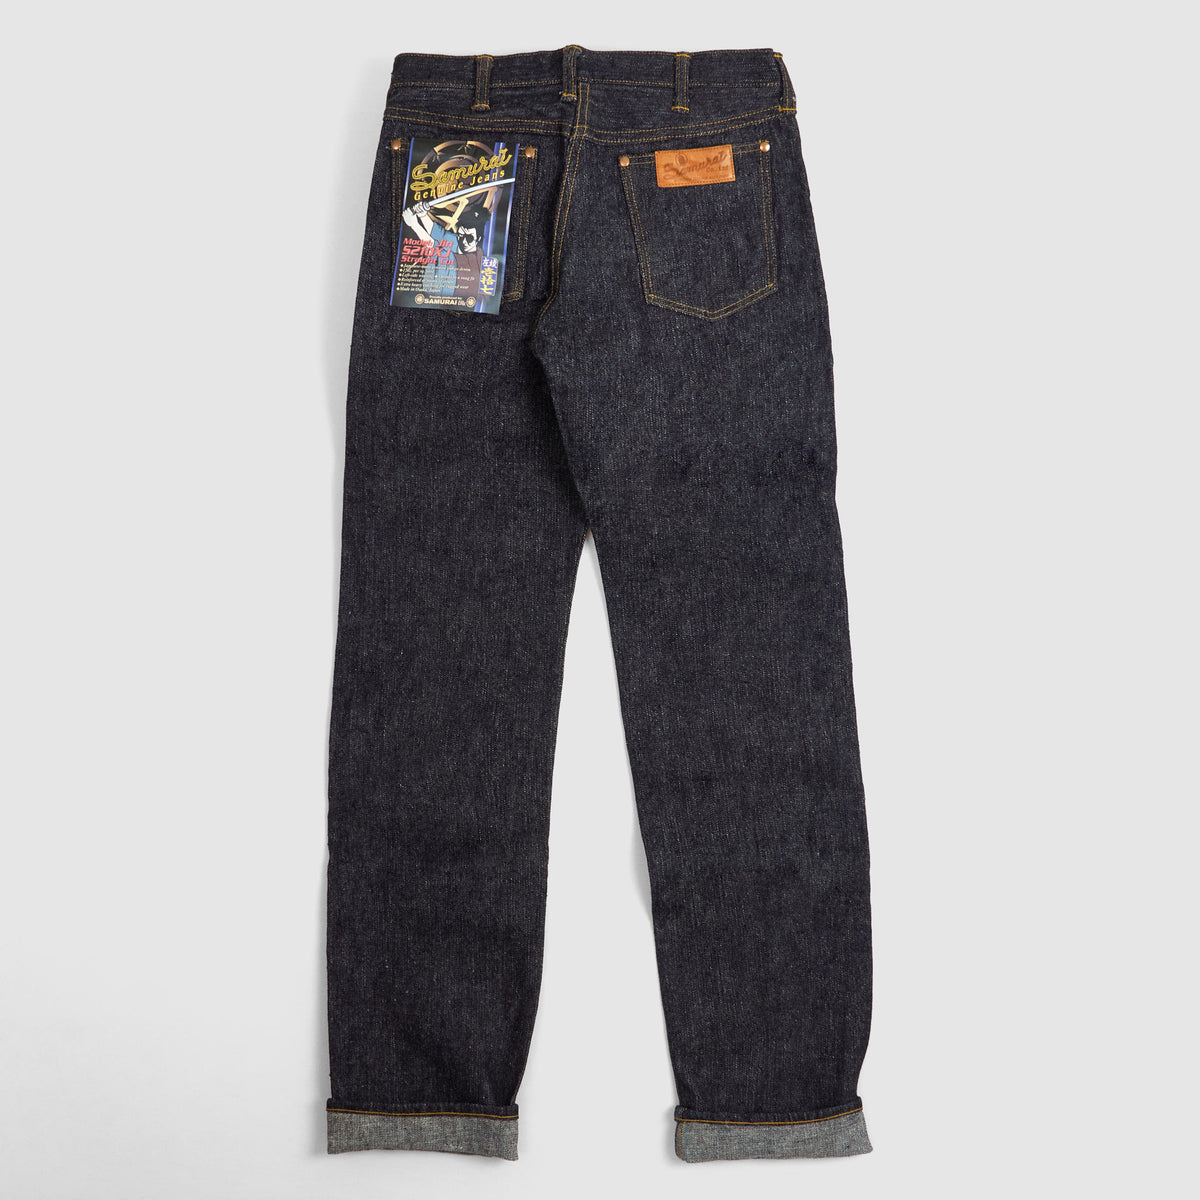 Samurai Jeans 17oz Vintage Slubby Selvage Denim Jeans